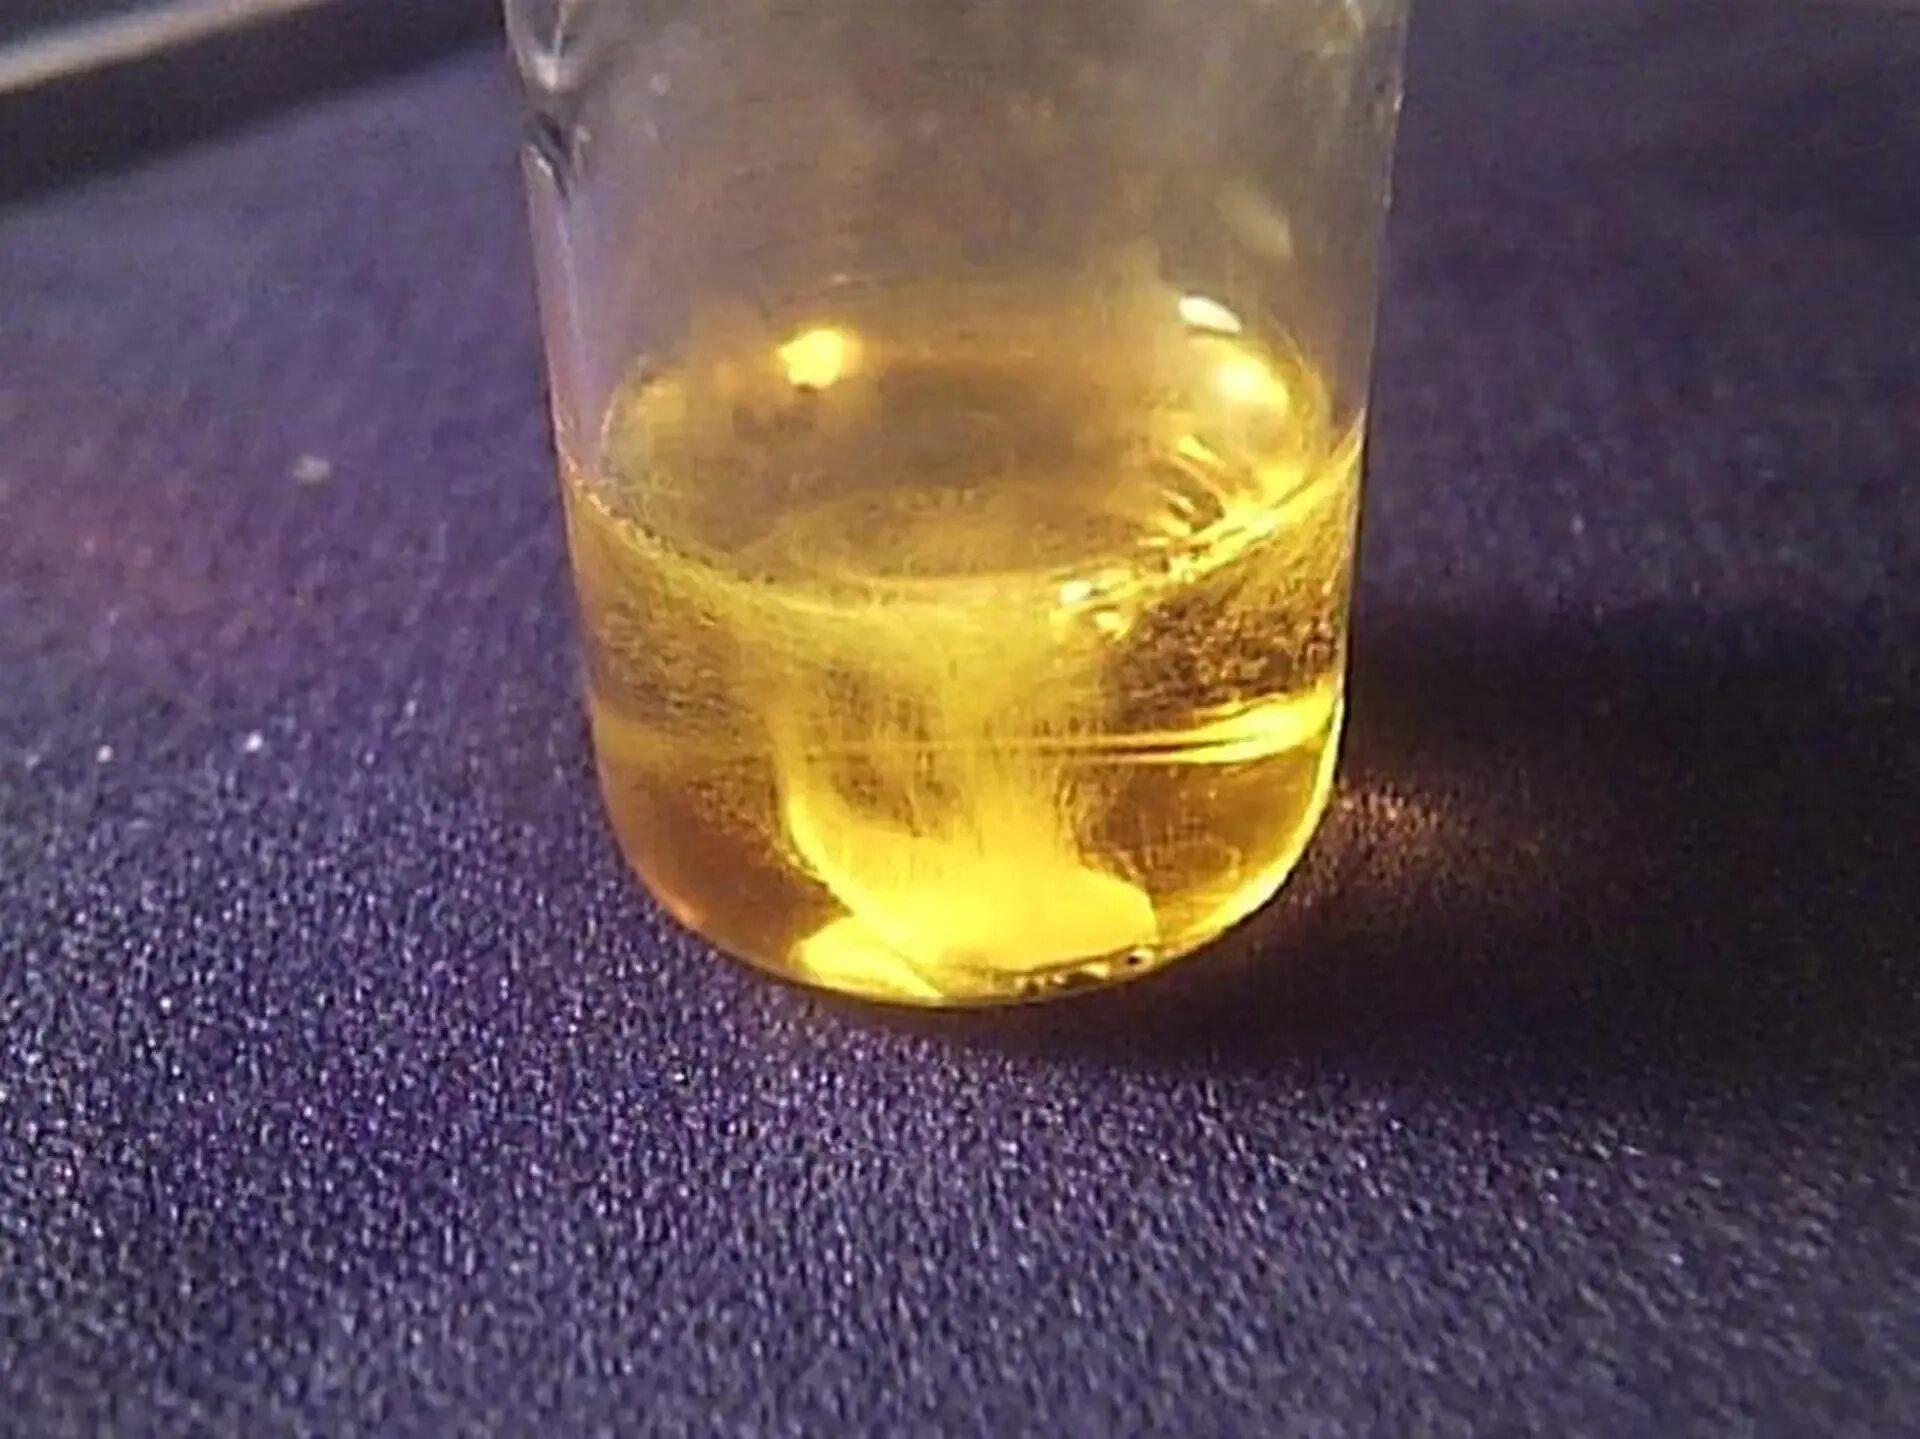 Раствор хлорида золота